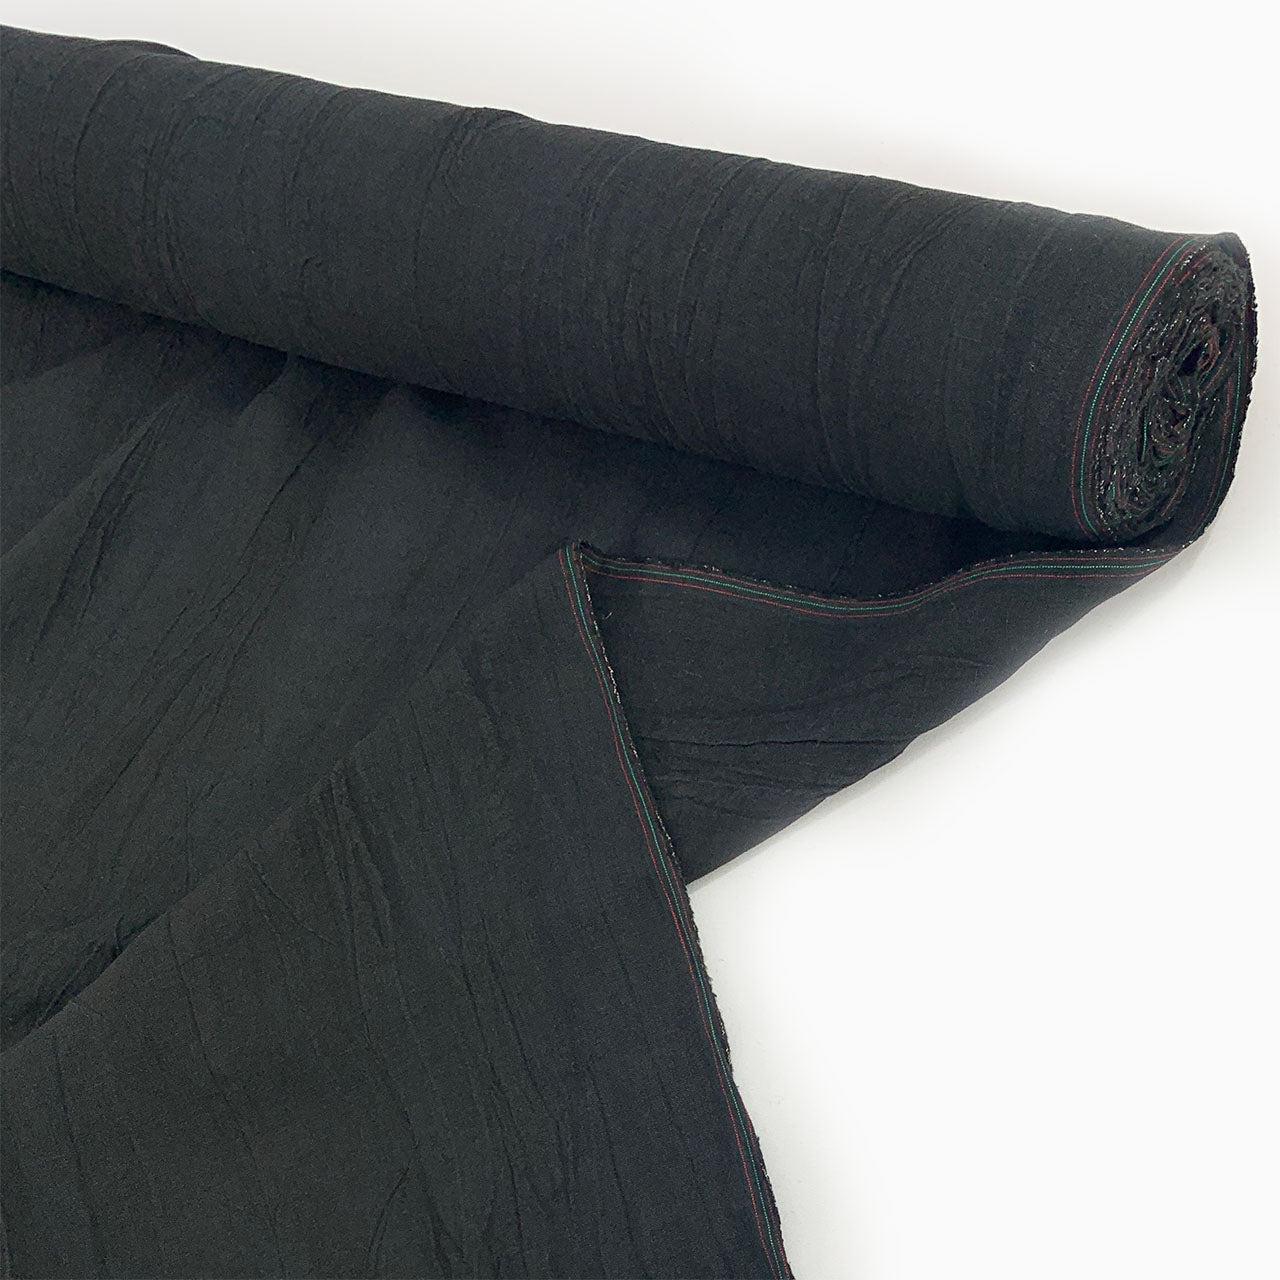 black texture linen black crinkle linen - Fabric Collection